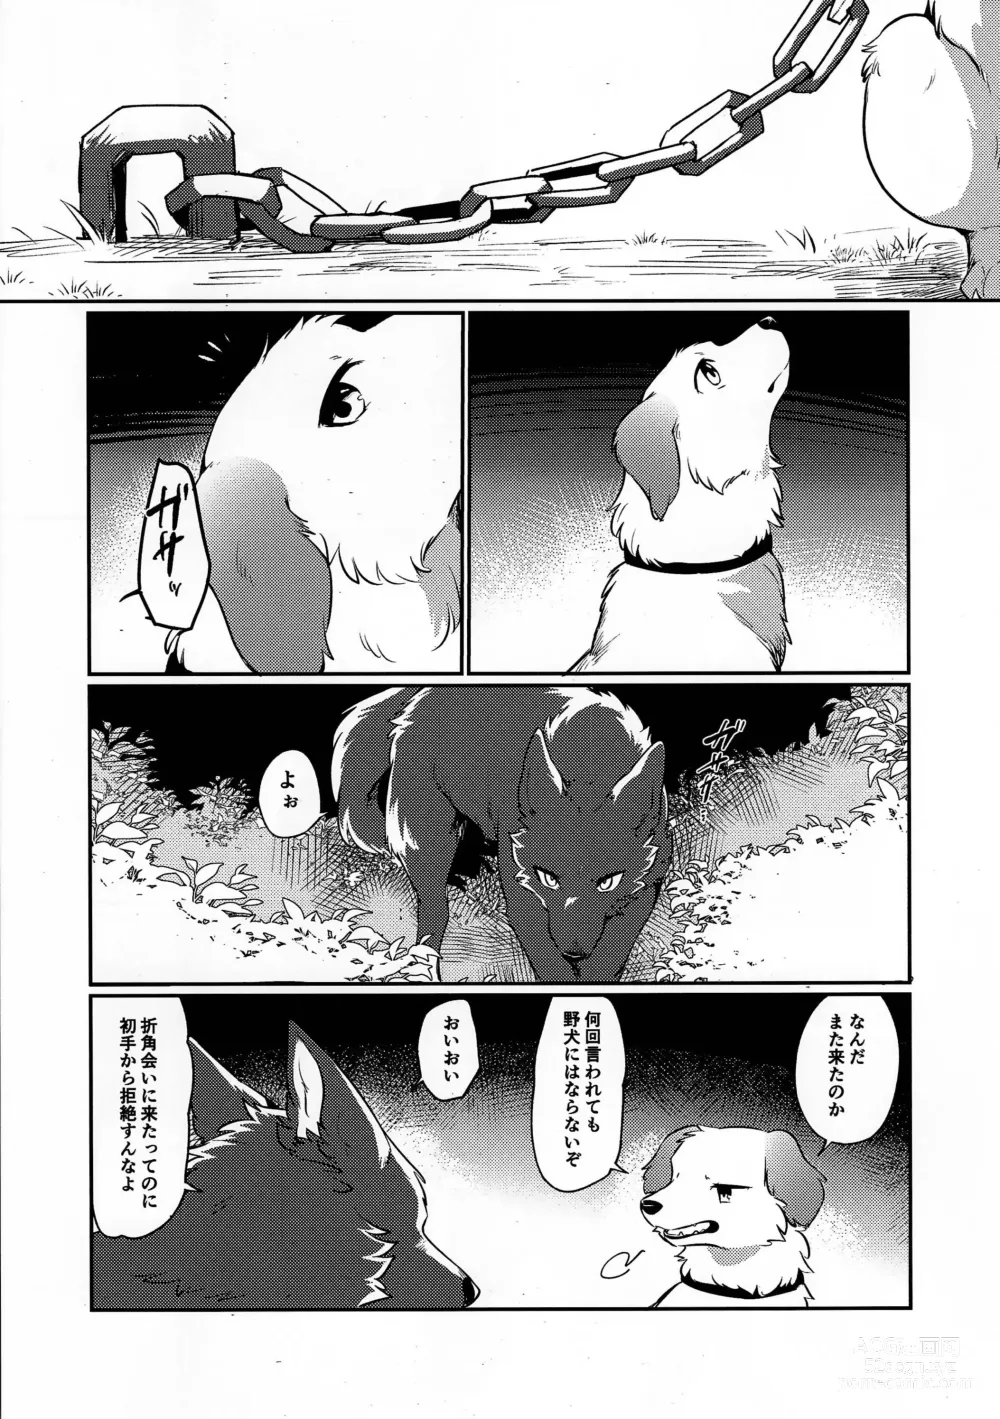 Page 30 of doujinshi Dearest 2